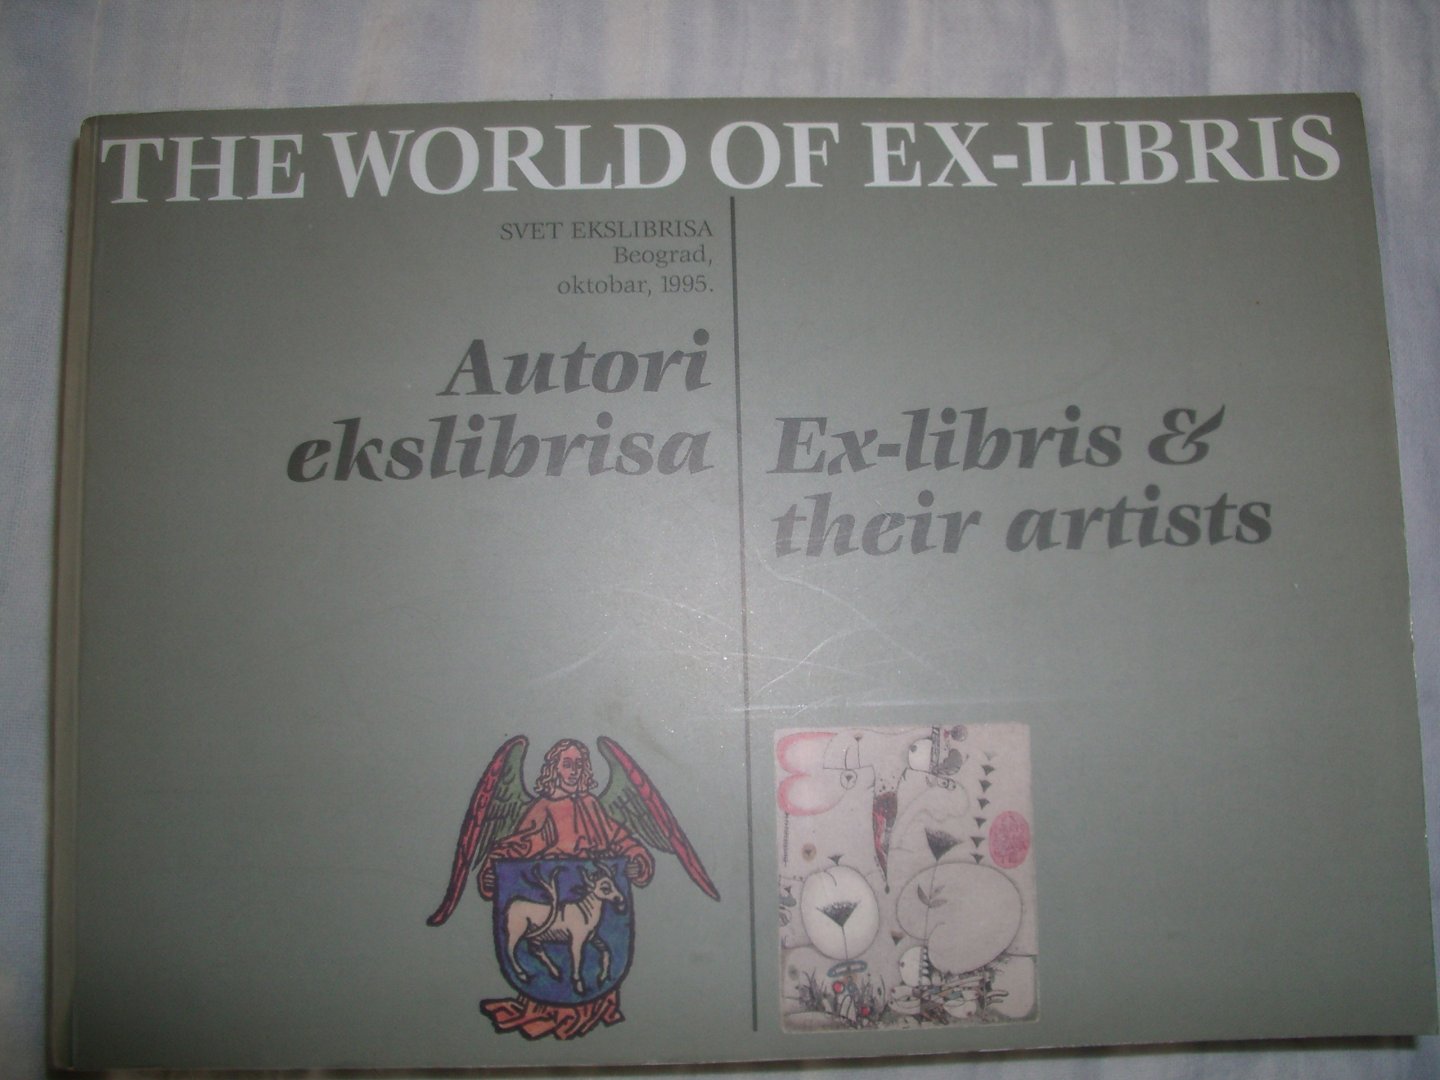 diverse auteurs - The World of Ex-Libris. Autori ekslibrisa/Ex-libris & their artists